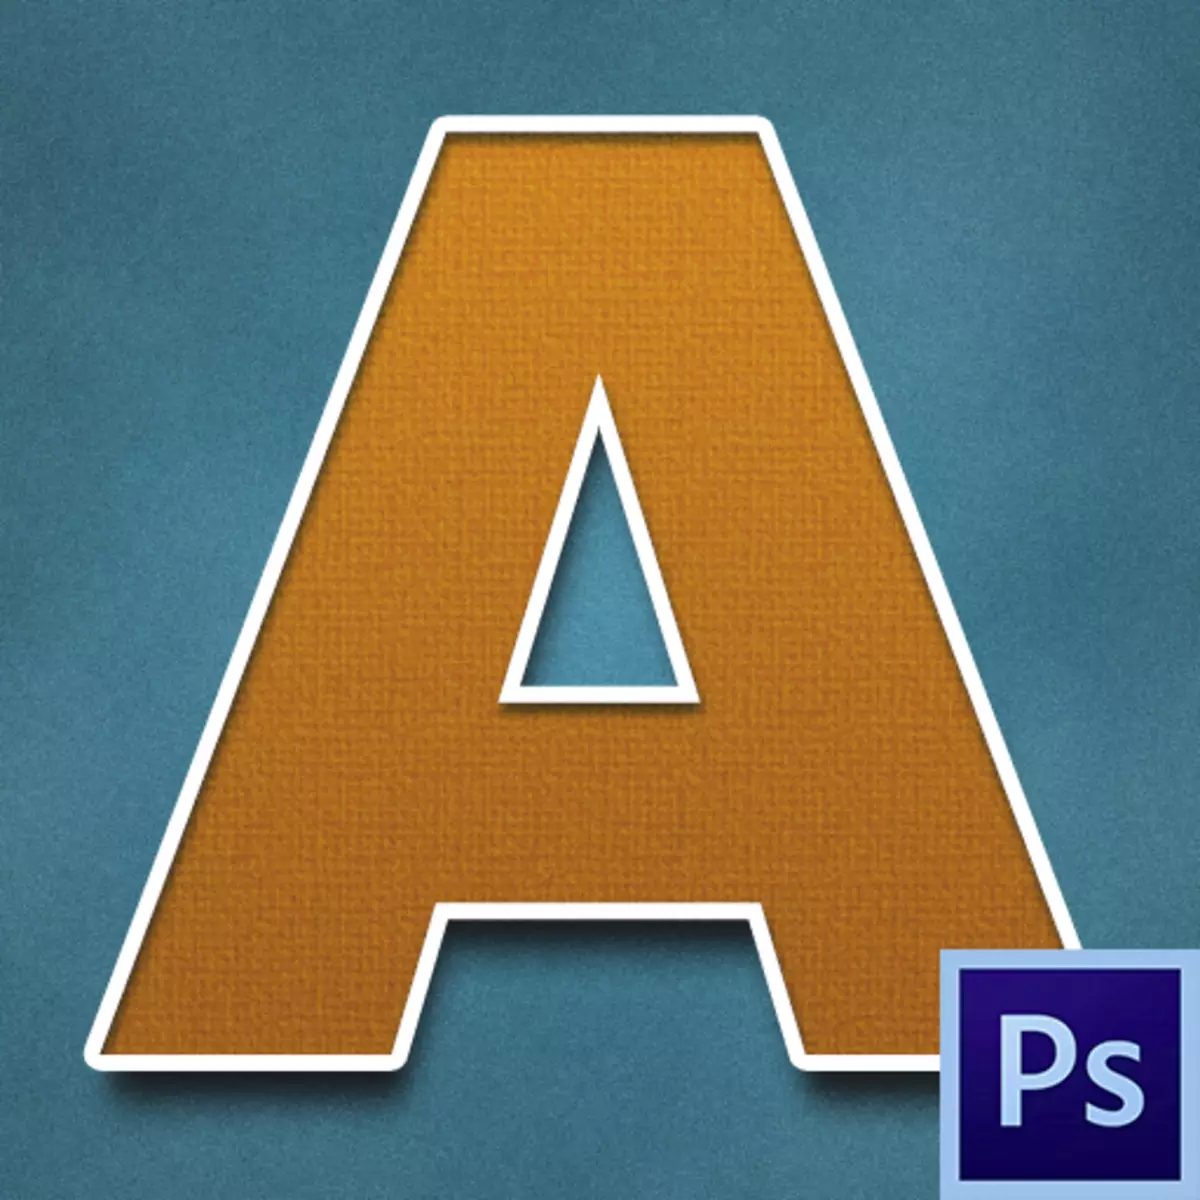 Kako napraviti prekrasan font u Photoshopu